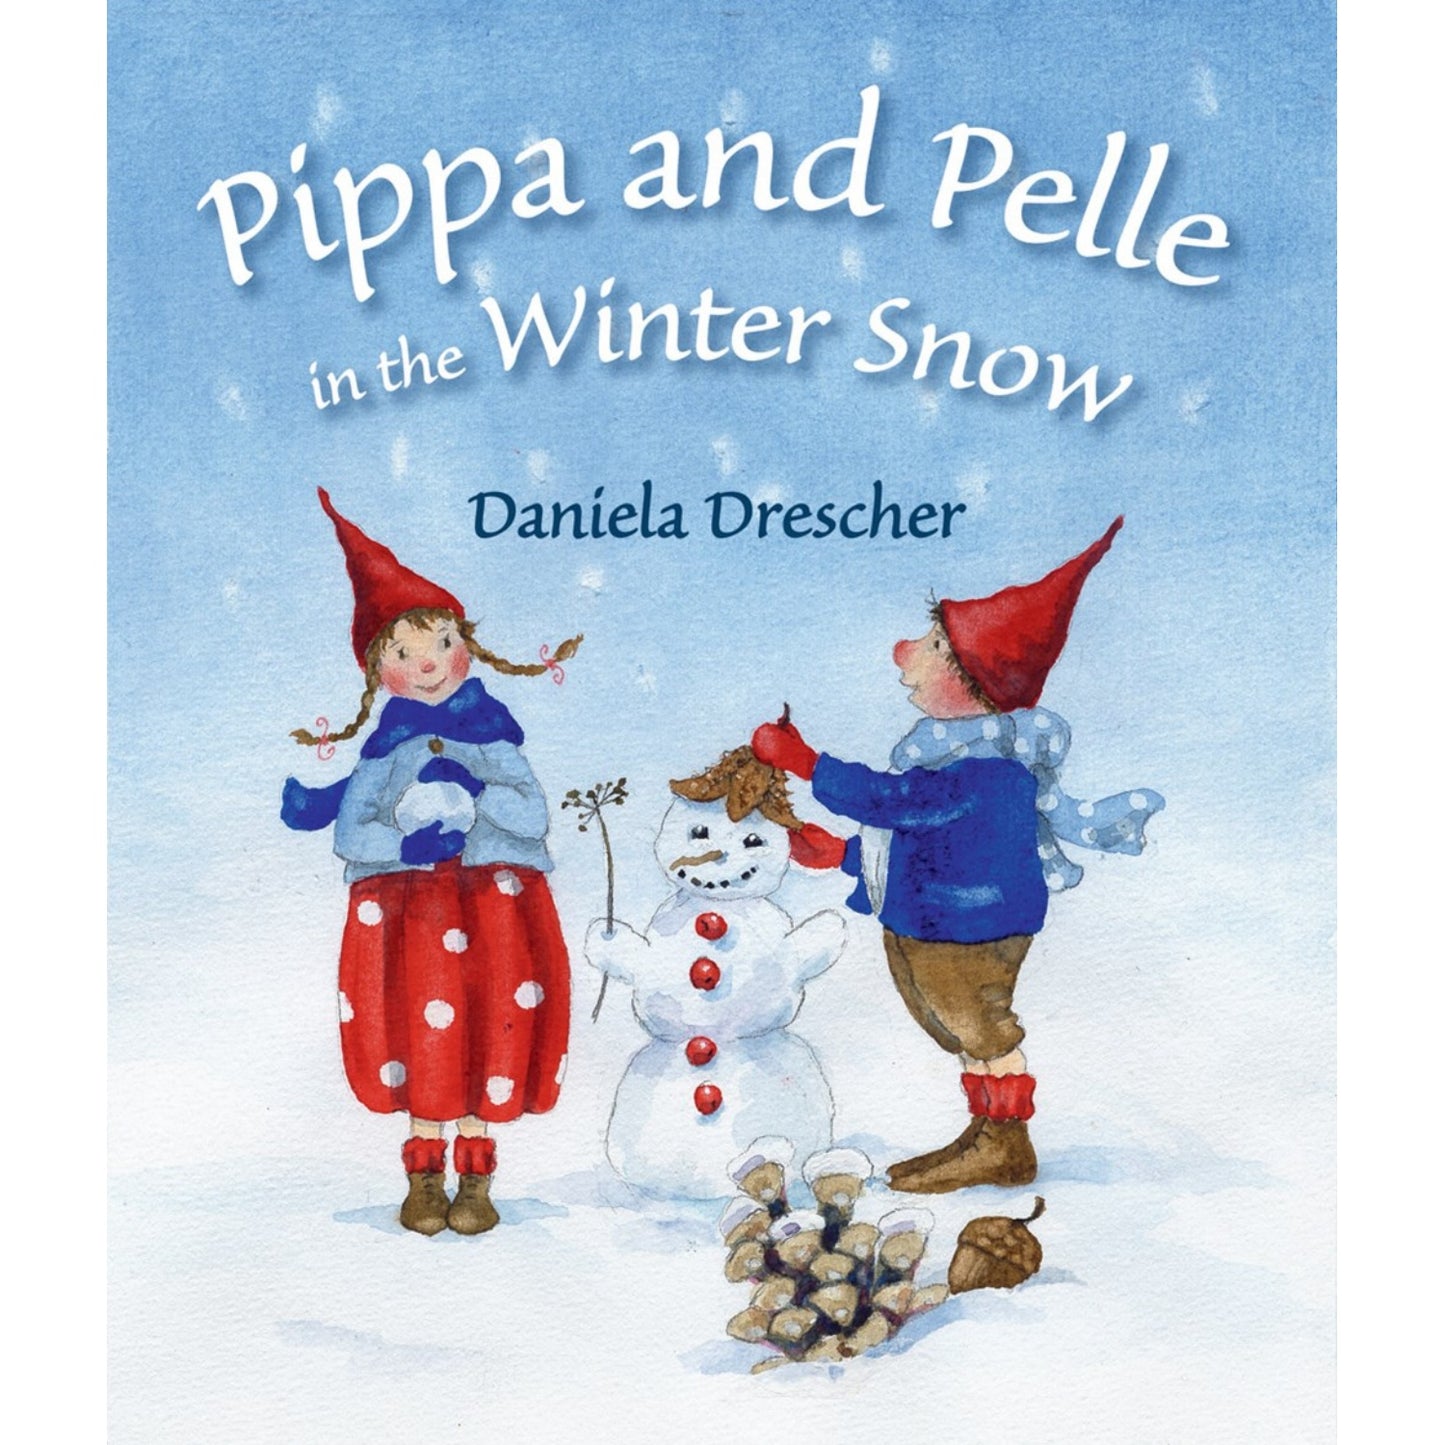 Pippa and Pelle in the Winter Snow | Daniela Drescher | Board Book | Children’s Book on Seasons